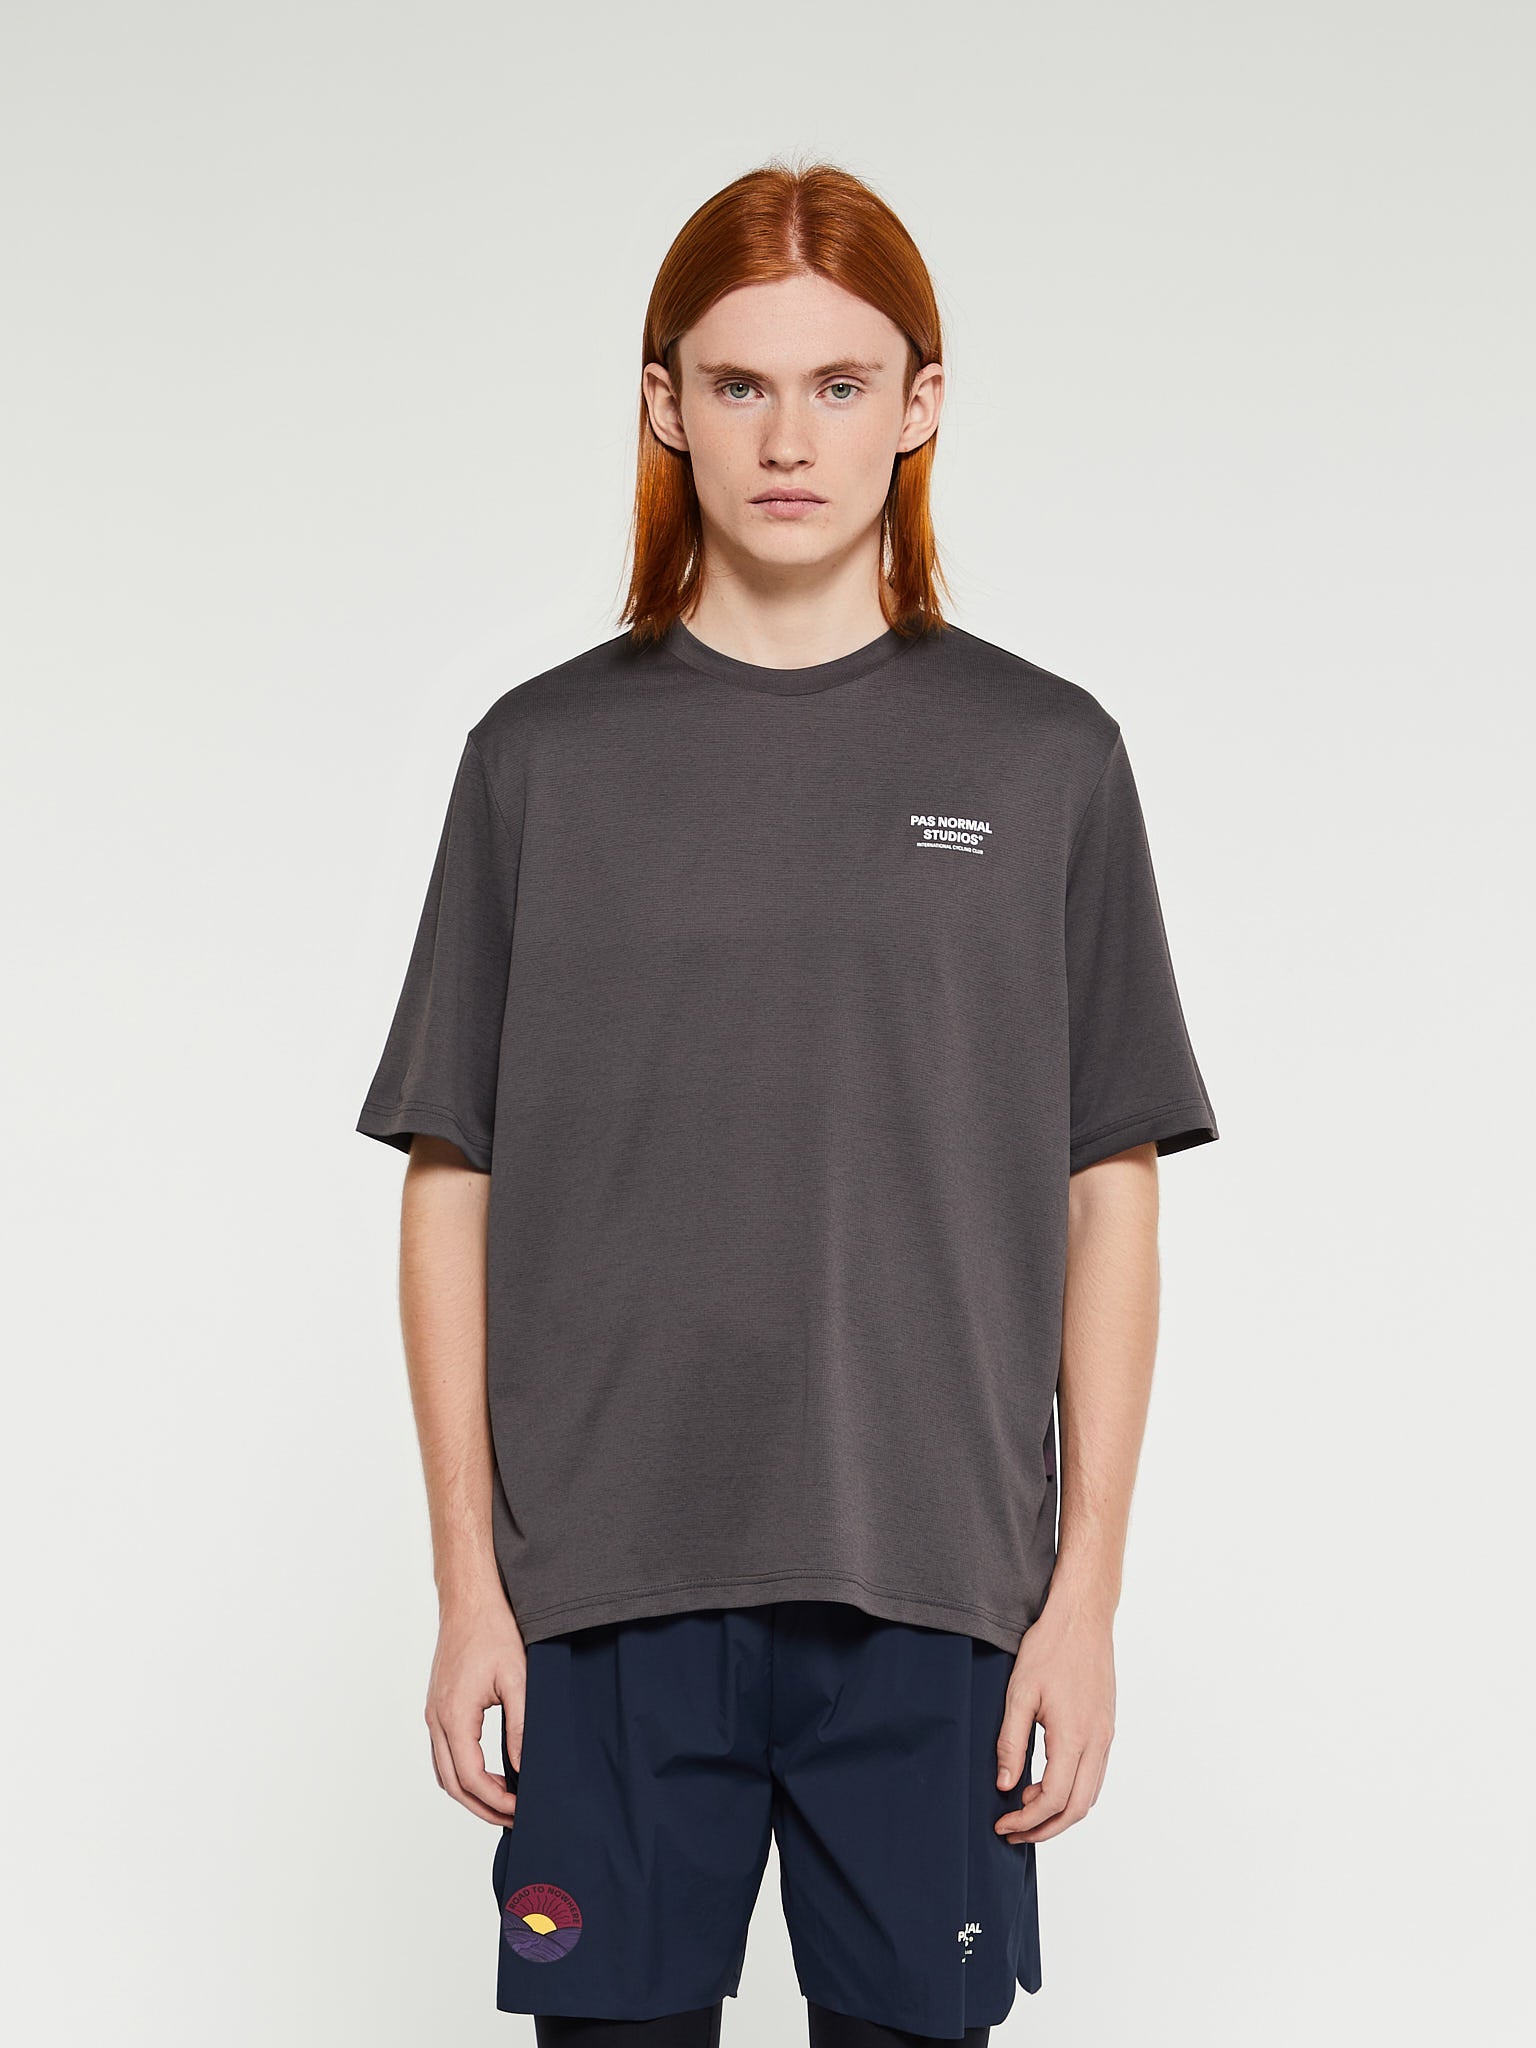 Pas Normal Studios - Balance T-Shirt in Stone Grey